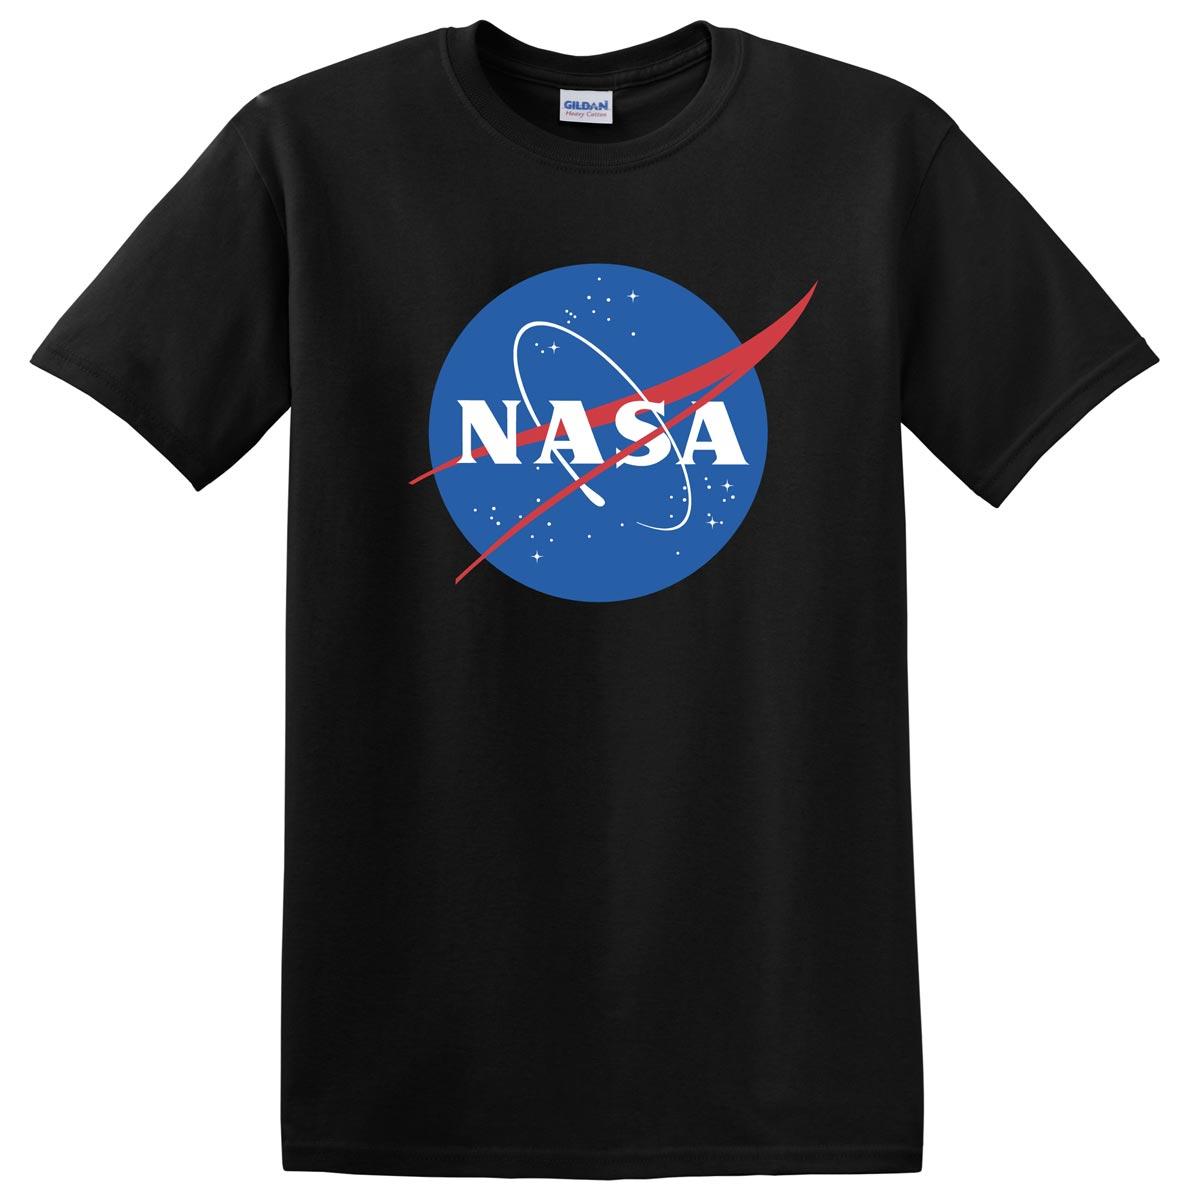 NASA Black Logo - NASA Shirt Meatball Science Space T Shirt Tee Black Men Women Adult